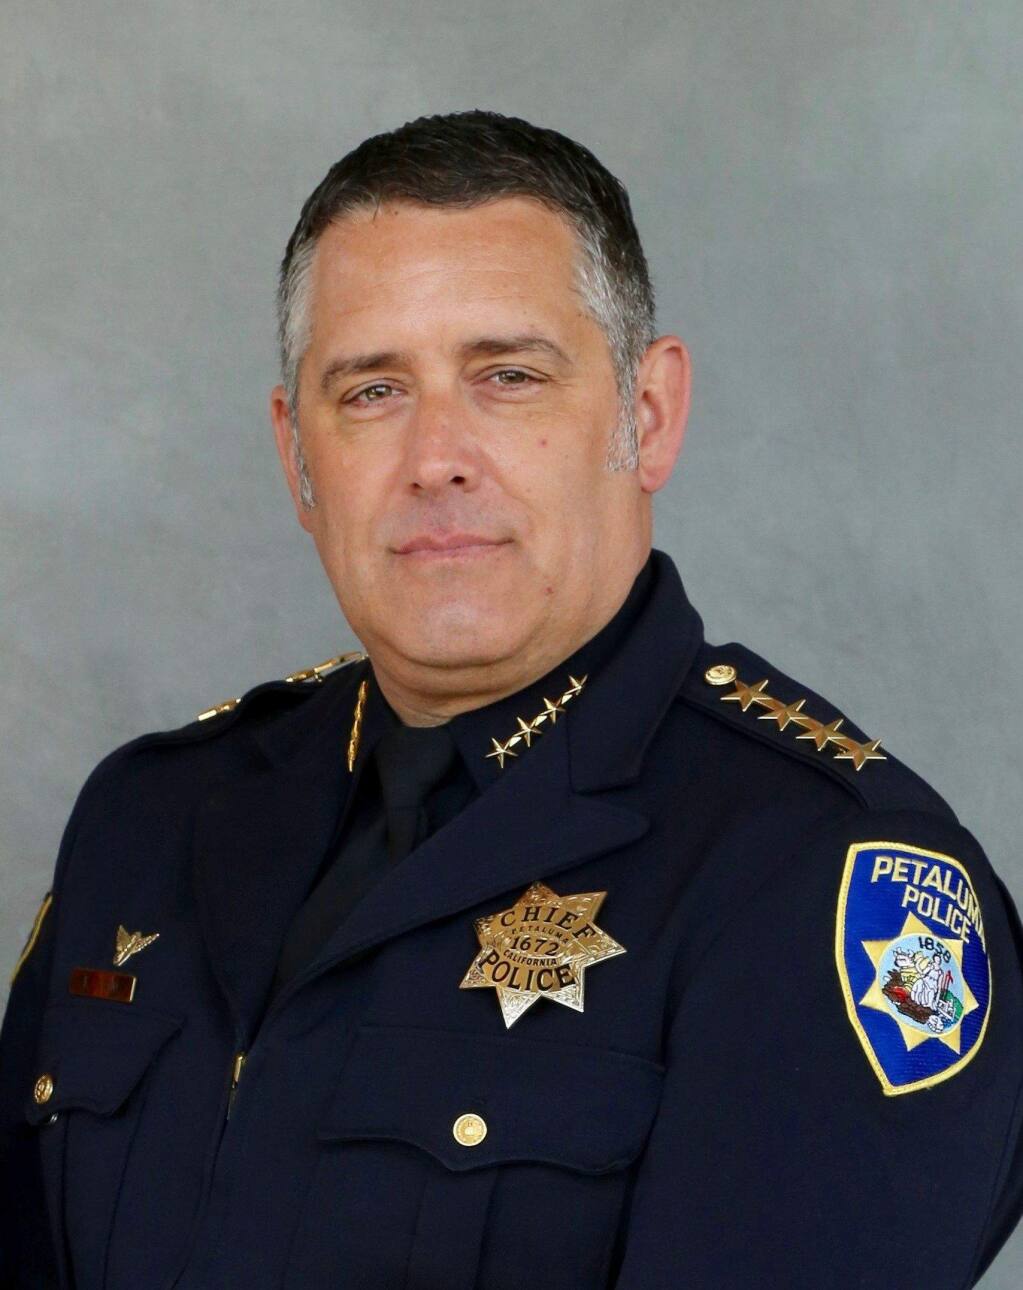 Petaluma Police Chief Ken Savano